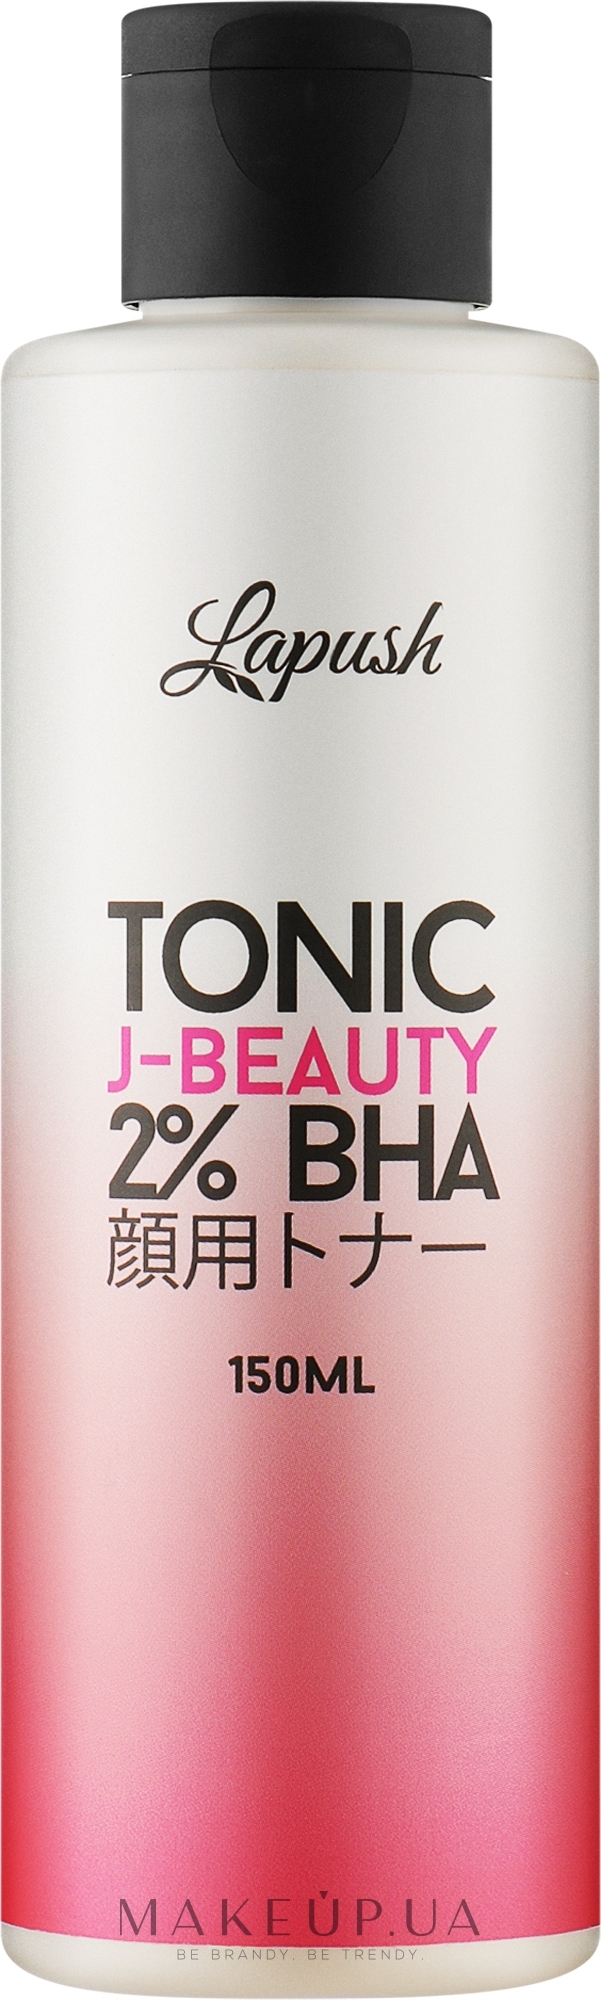 Тоник для лица - Lapush 2% ВНА J-Beauty Tonic — фото 150ml